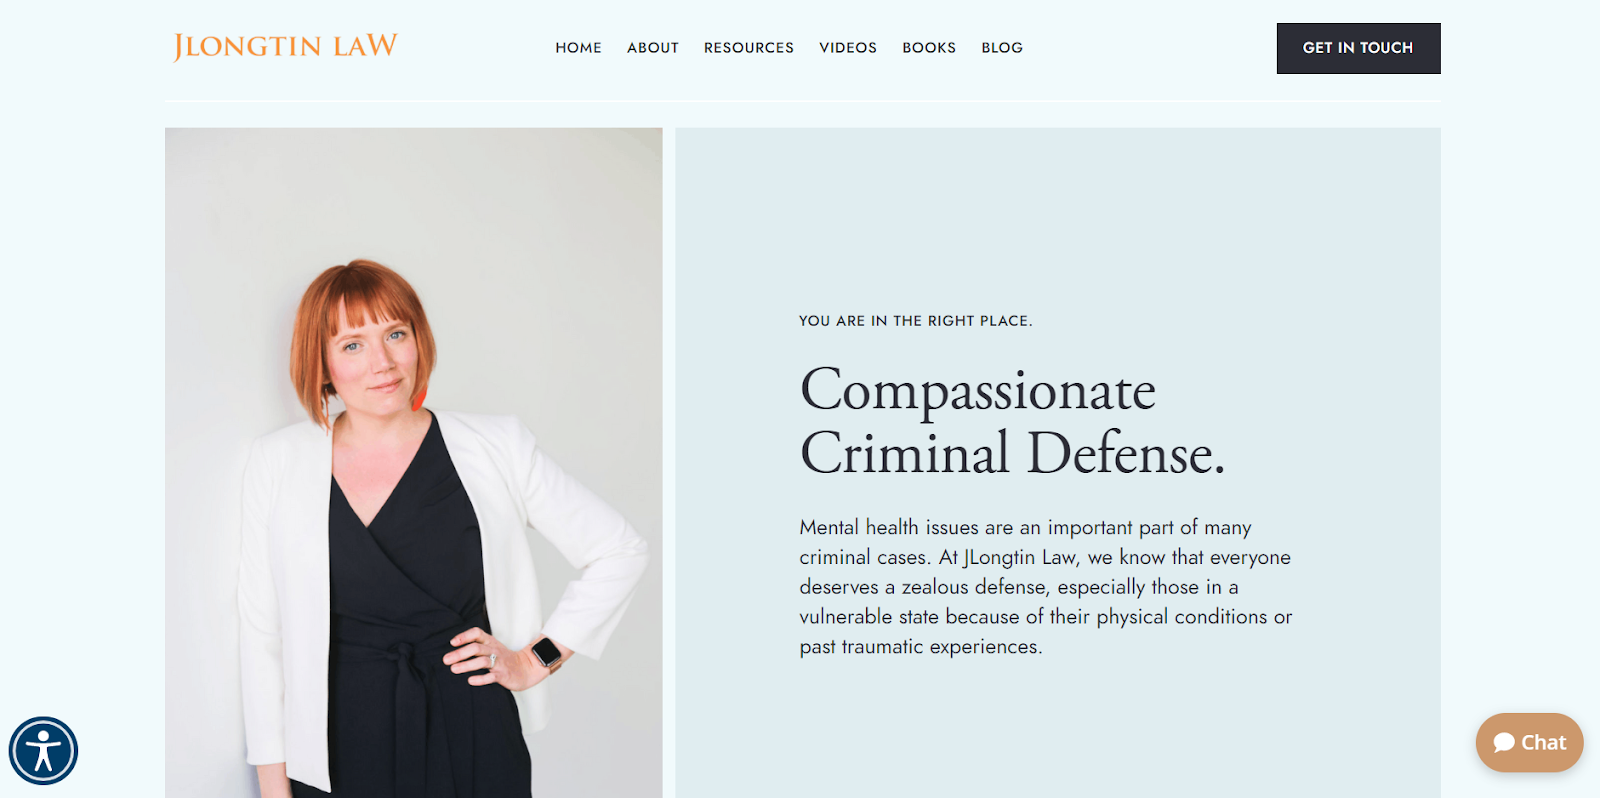 A criminal defense attorney website